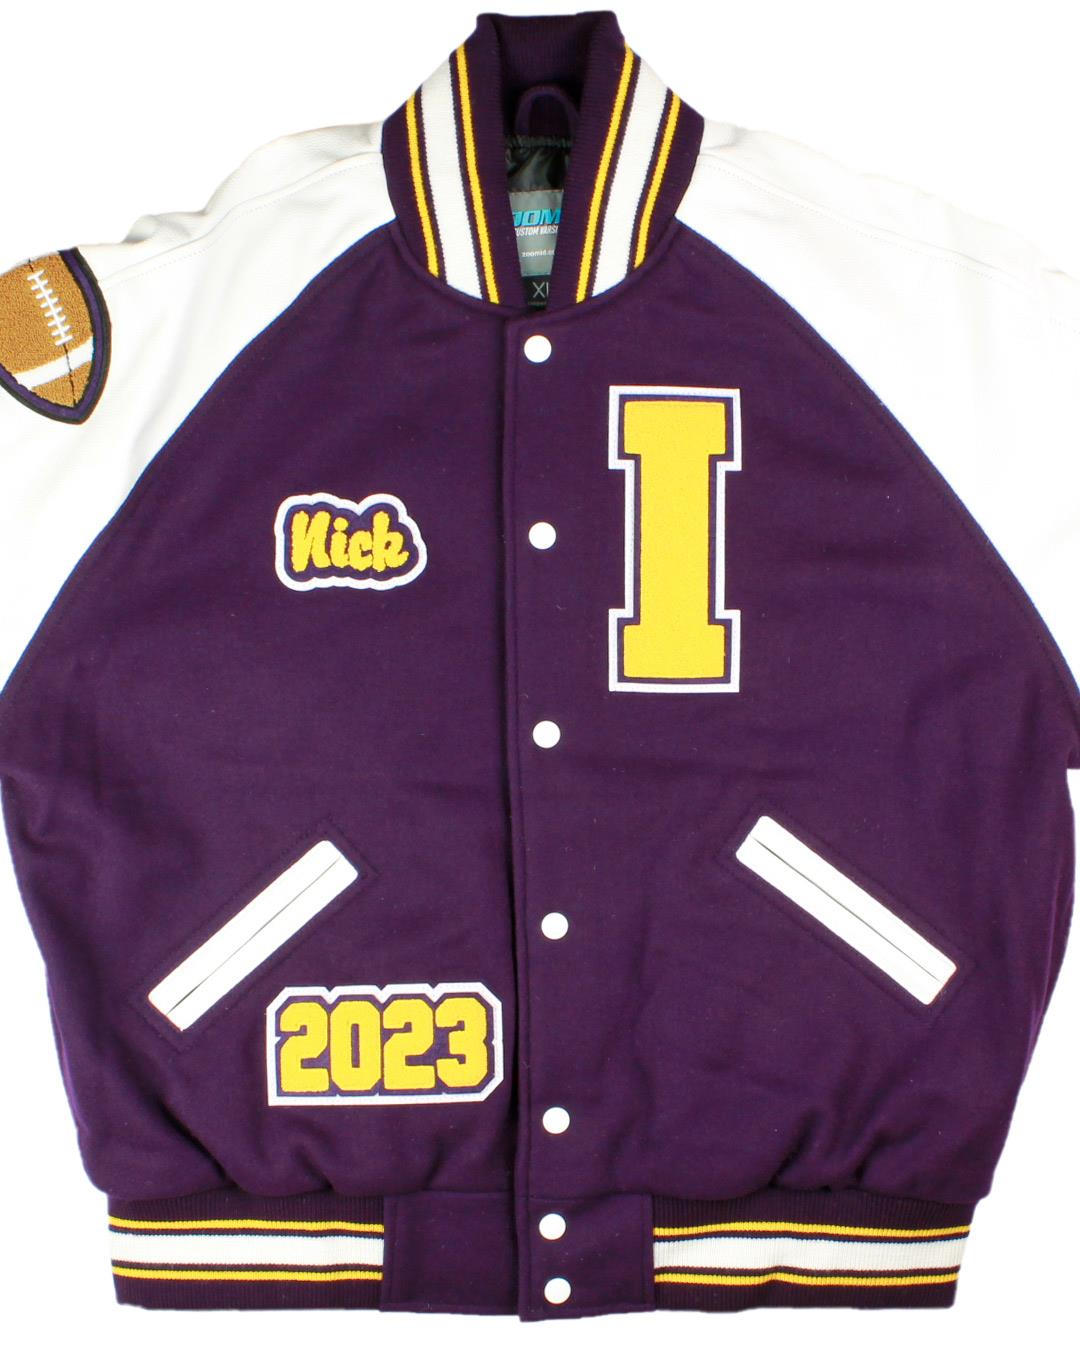 Issaquah High School Lettermen Jacket, Issaquah, WA - Front